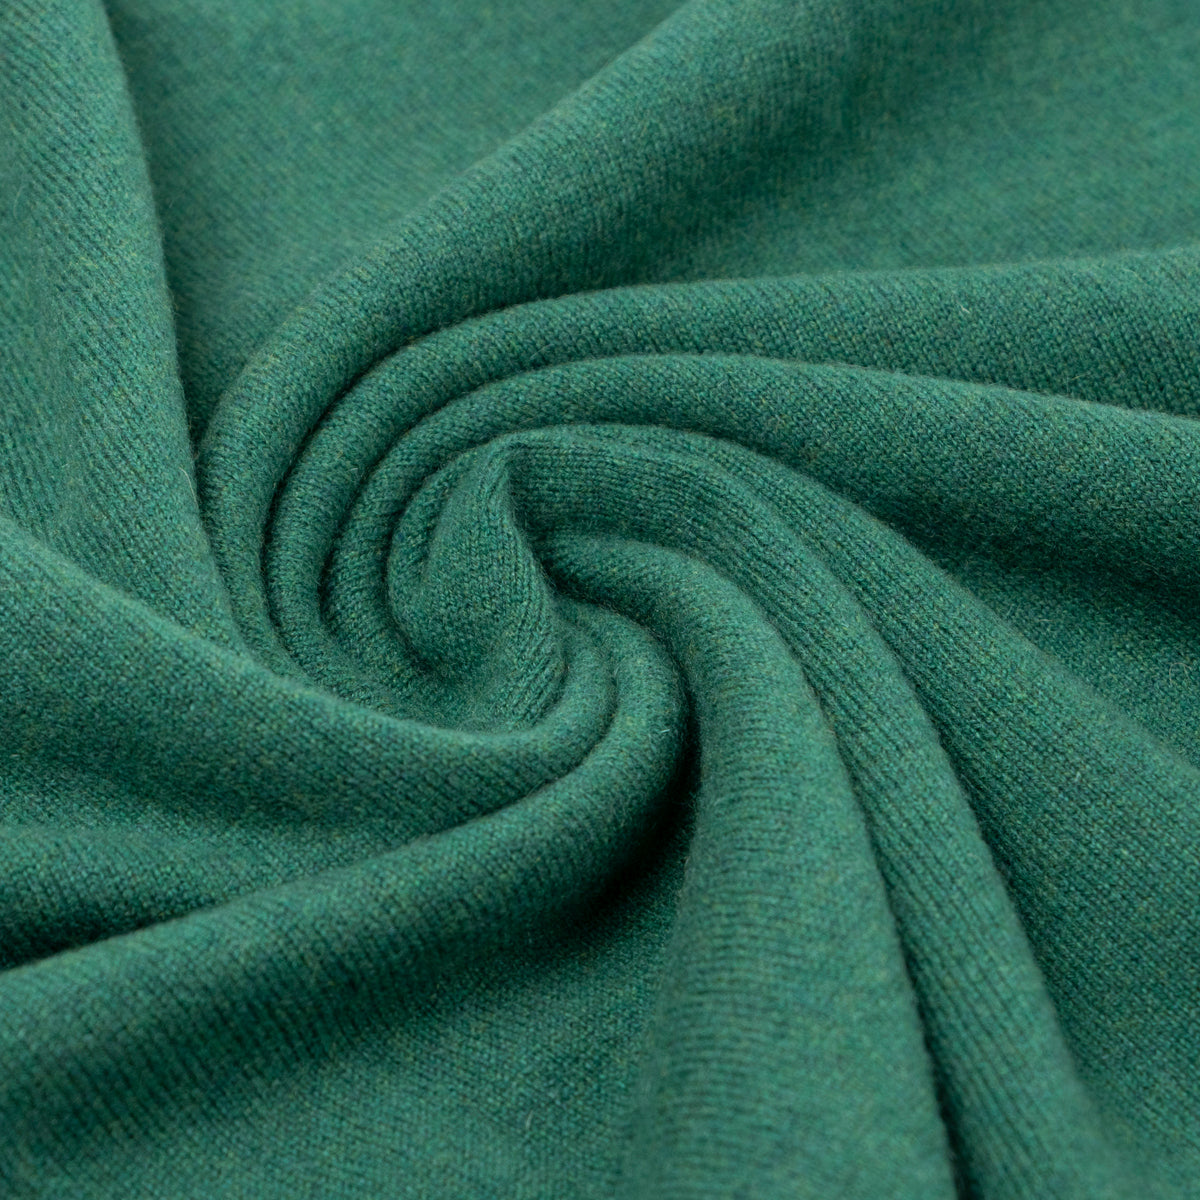 Spruce Green Blenheim Cashmere Sleeveless V-Neck Sweater  Robert Old   